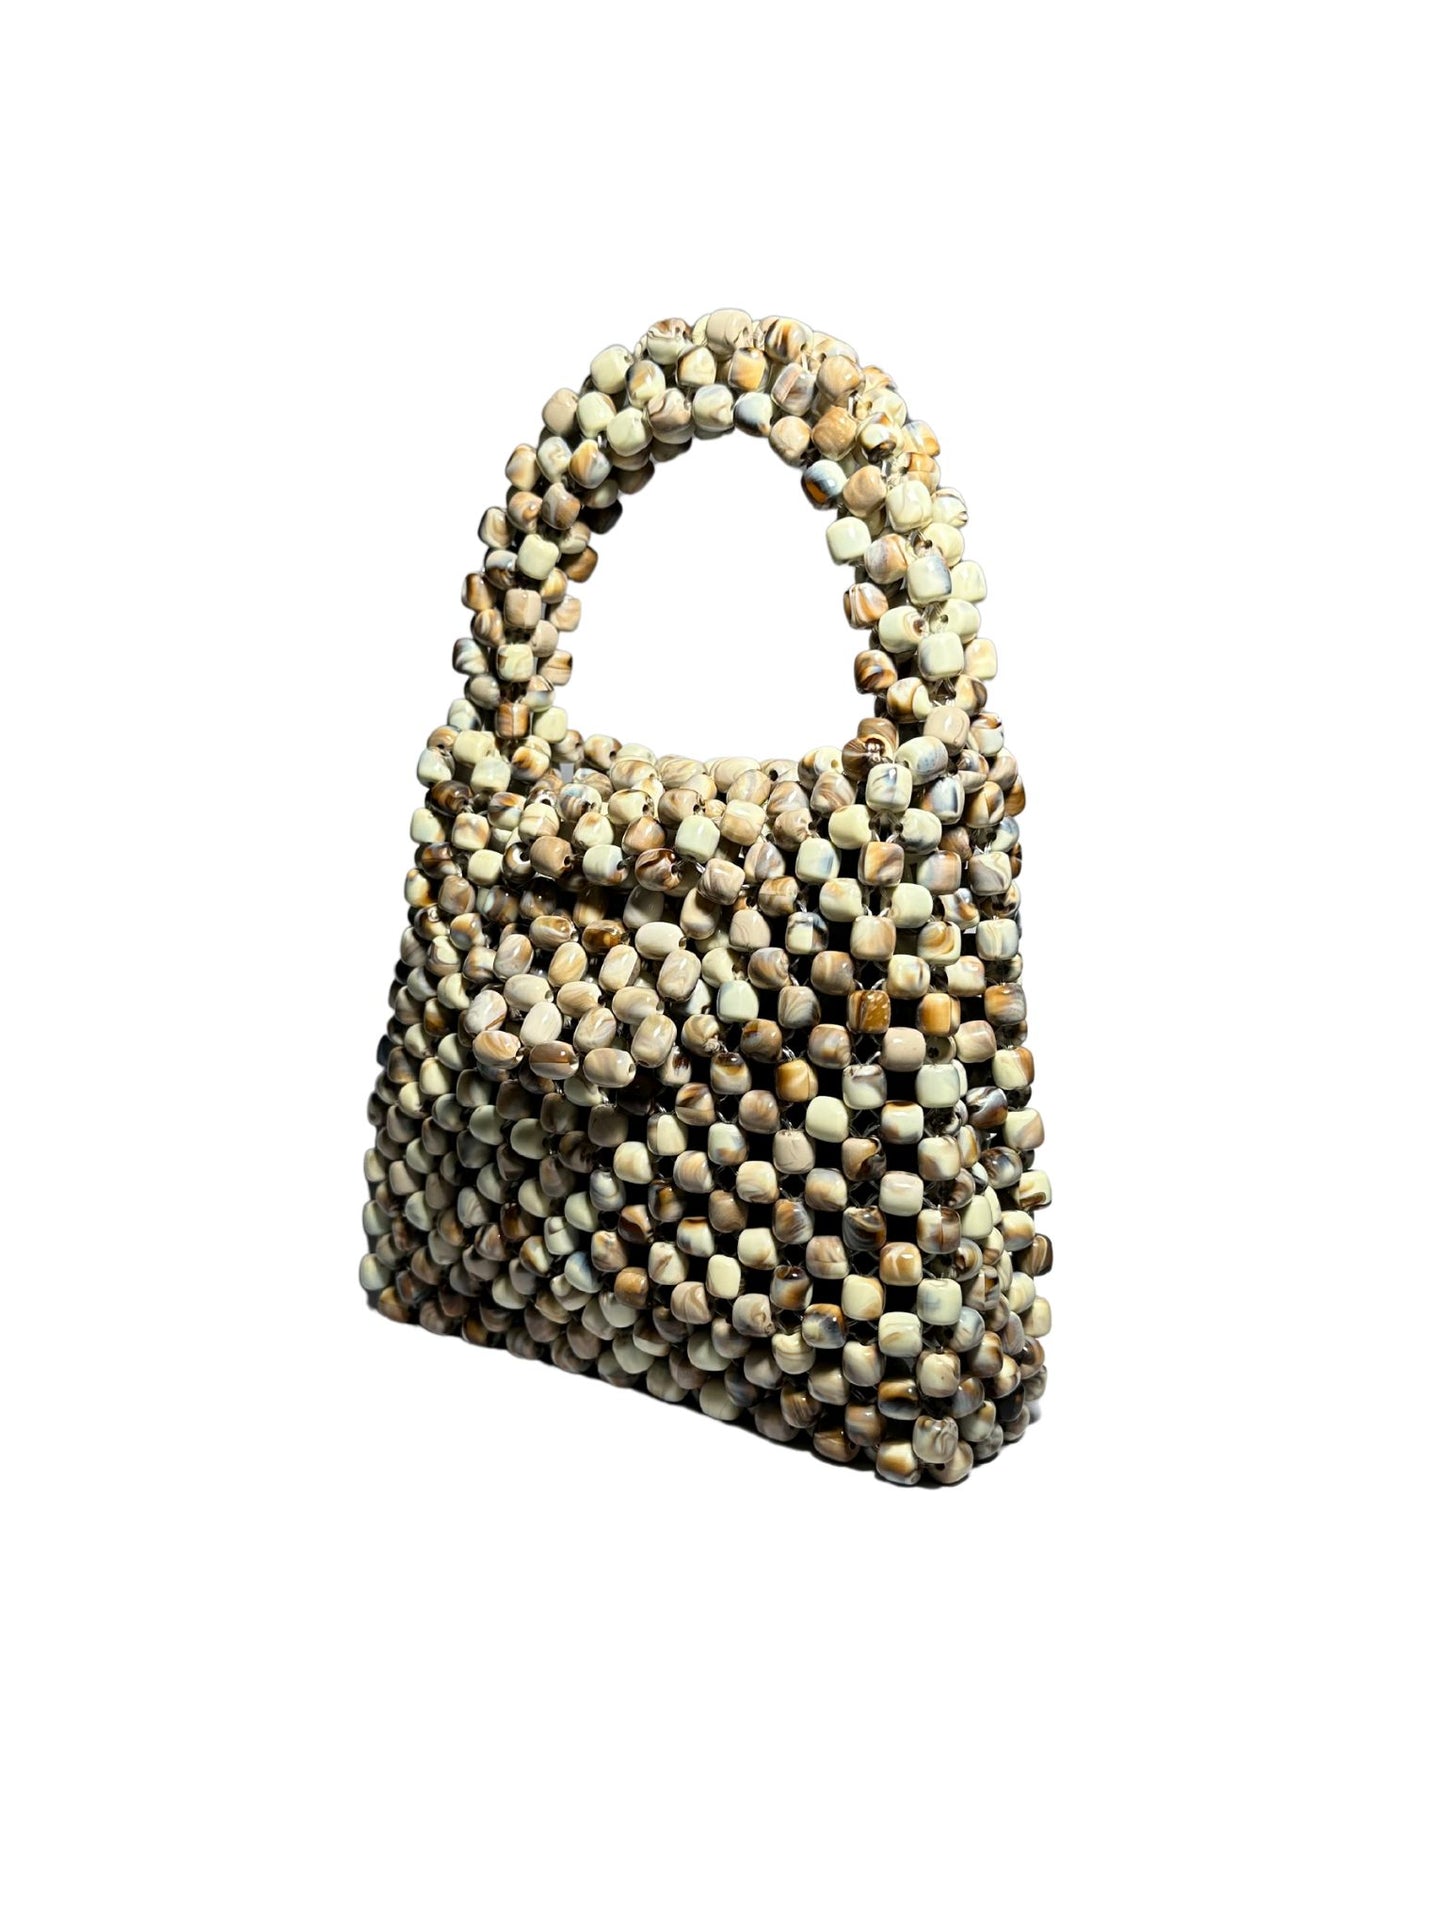 The MiMi Bead Bag